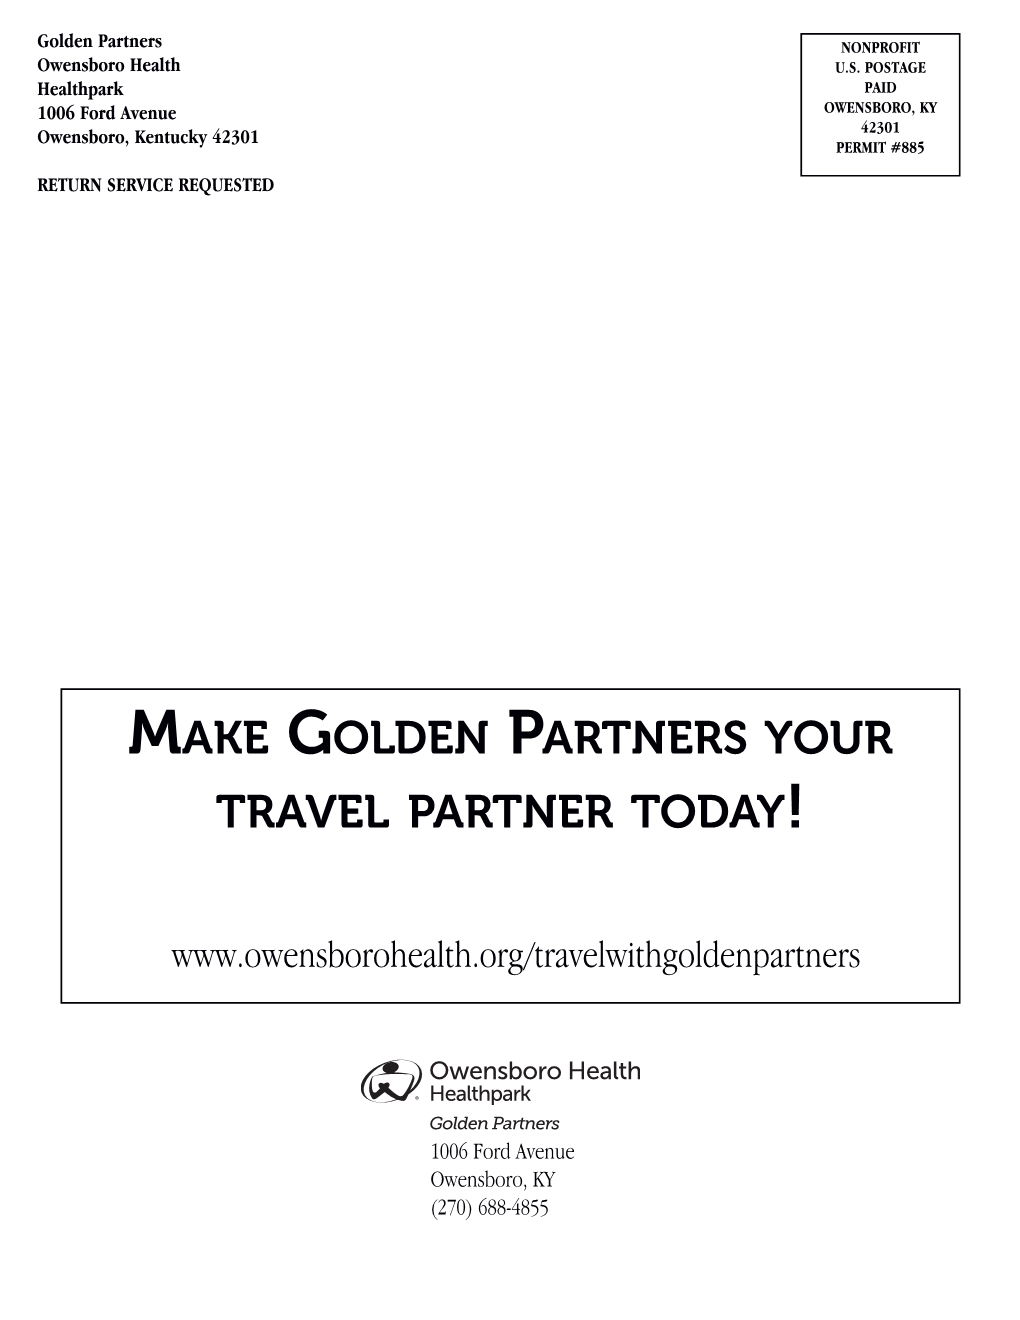 Make Golden Partners Your Travel Partner Today!